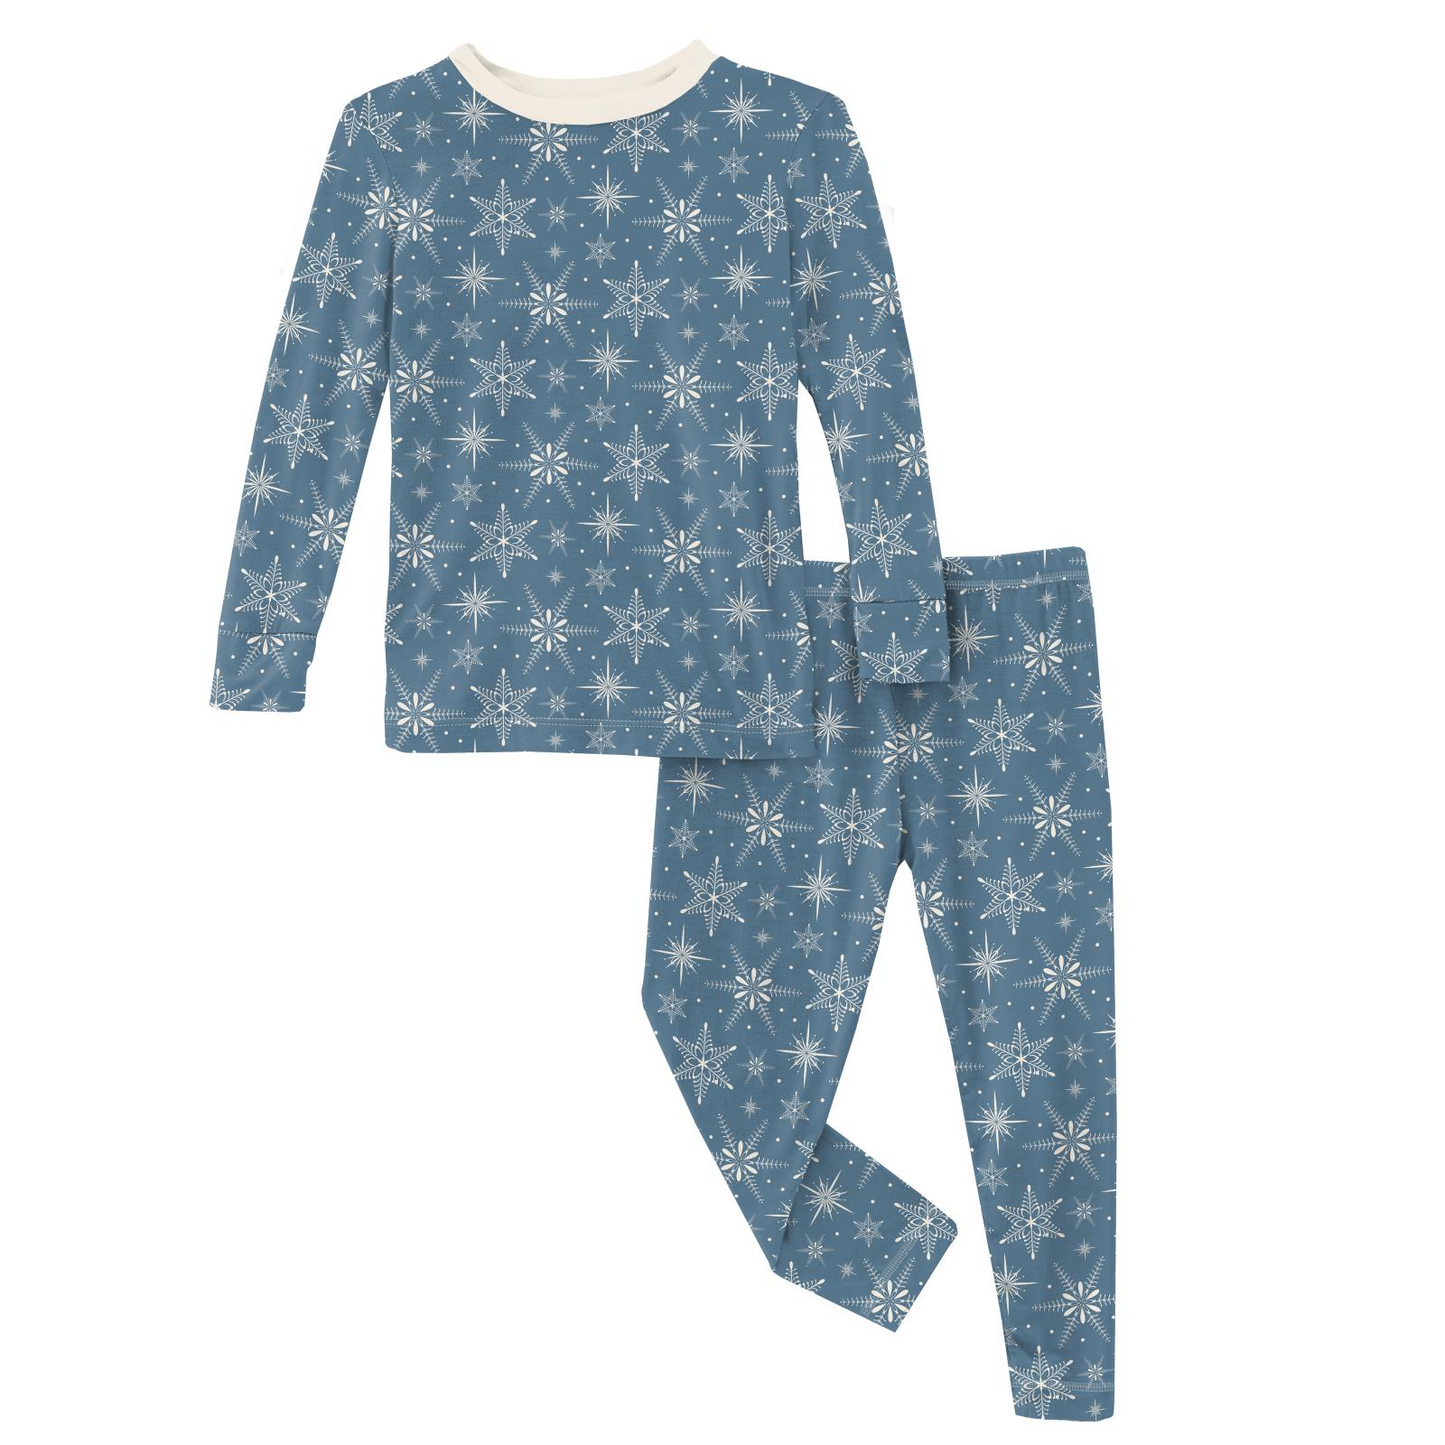 Kickee Pants Print Long Sleeve Pajama Set: Parisian Blue Snowflakes